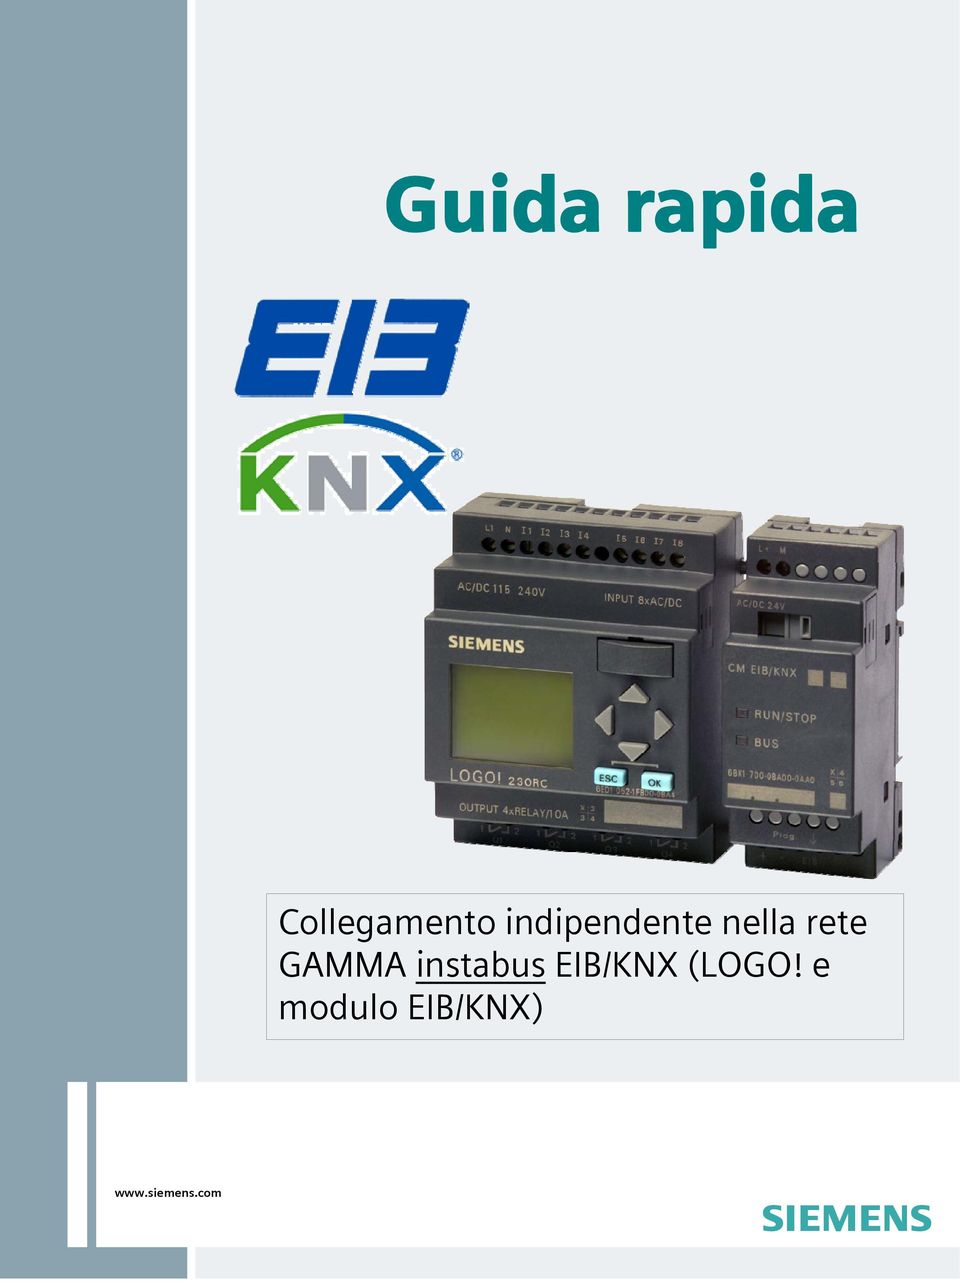 GAMMA instabus EIB/KNX (LOGO!